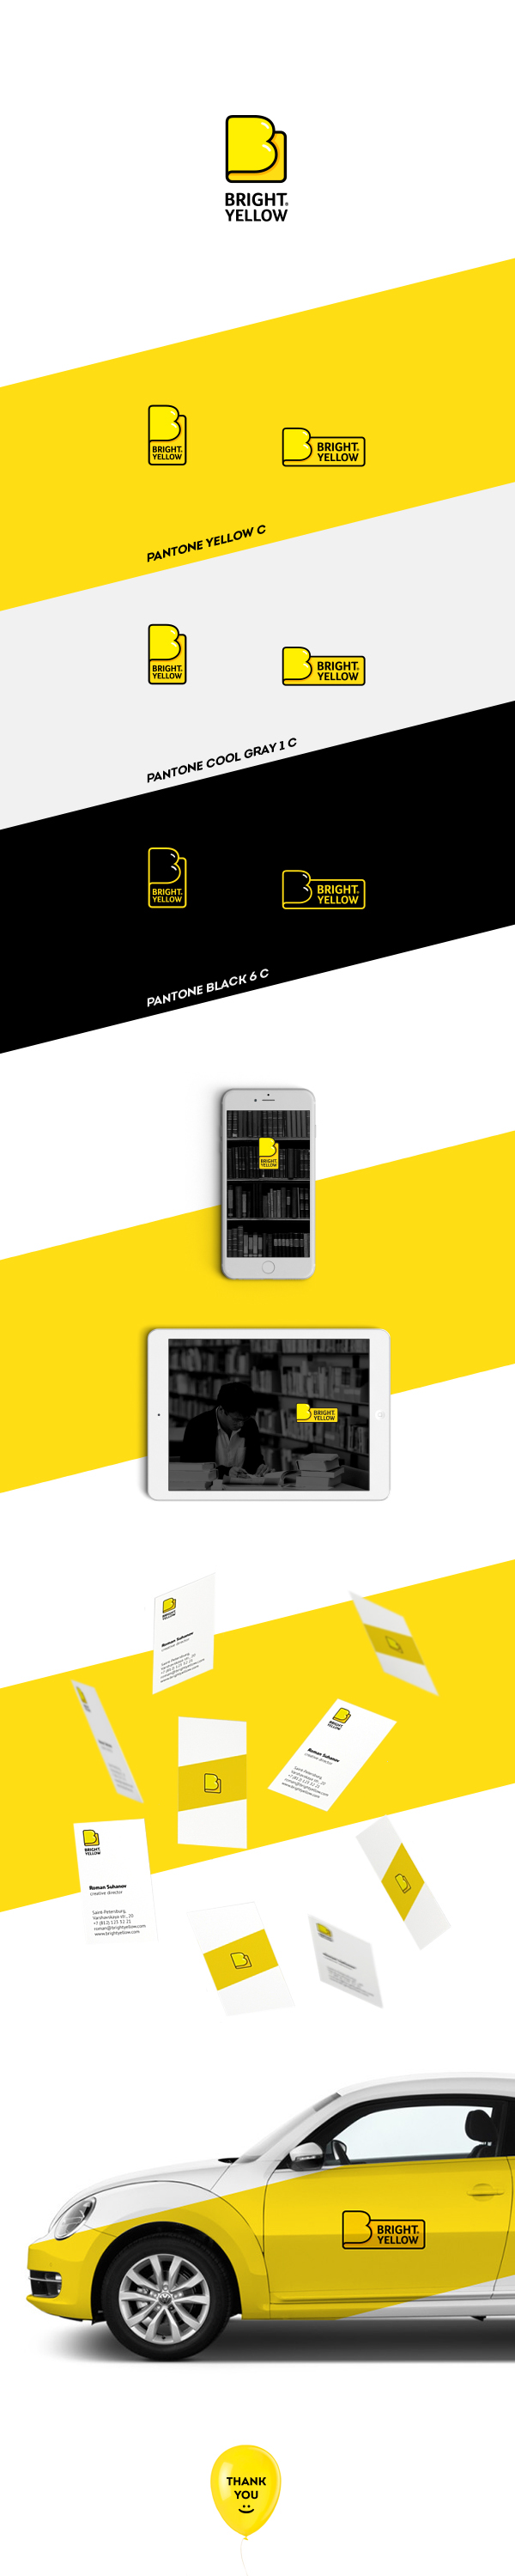 mobile app bright yellow logo bookmark application